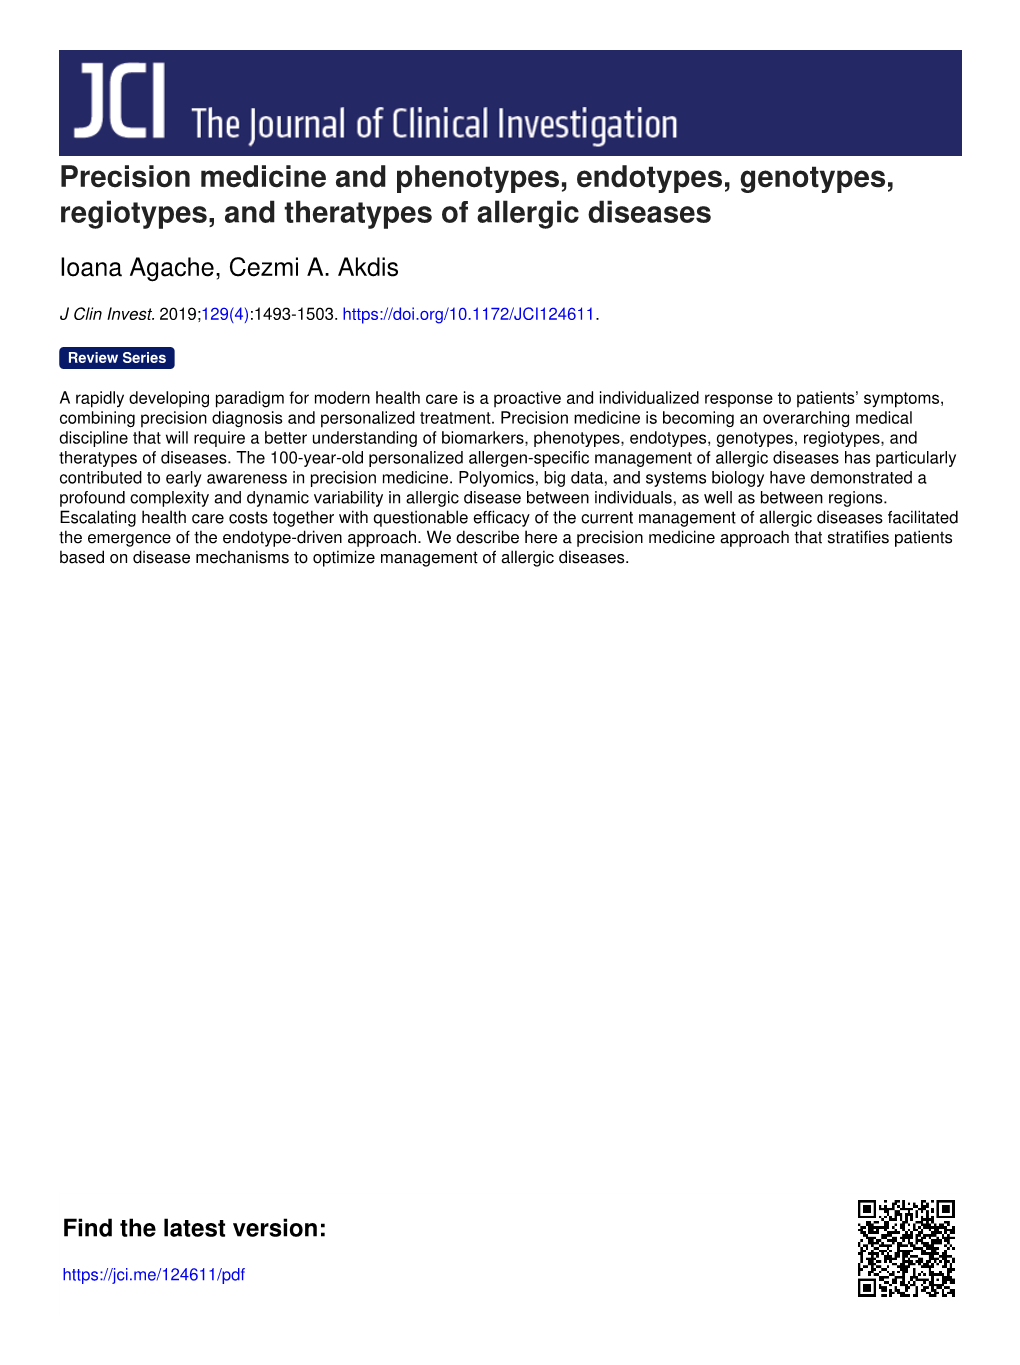 Precision Medicine and Phenotypes, Endotypes, Genotypes, Regiotypes, and Theratypes of Allergic Diseases